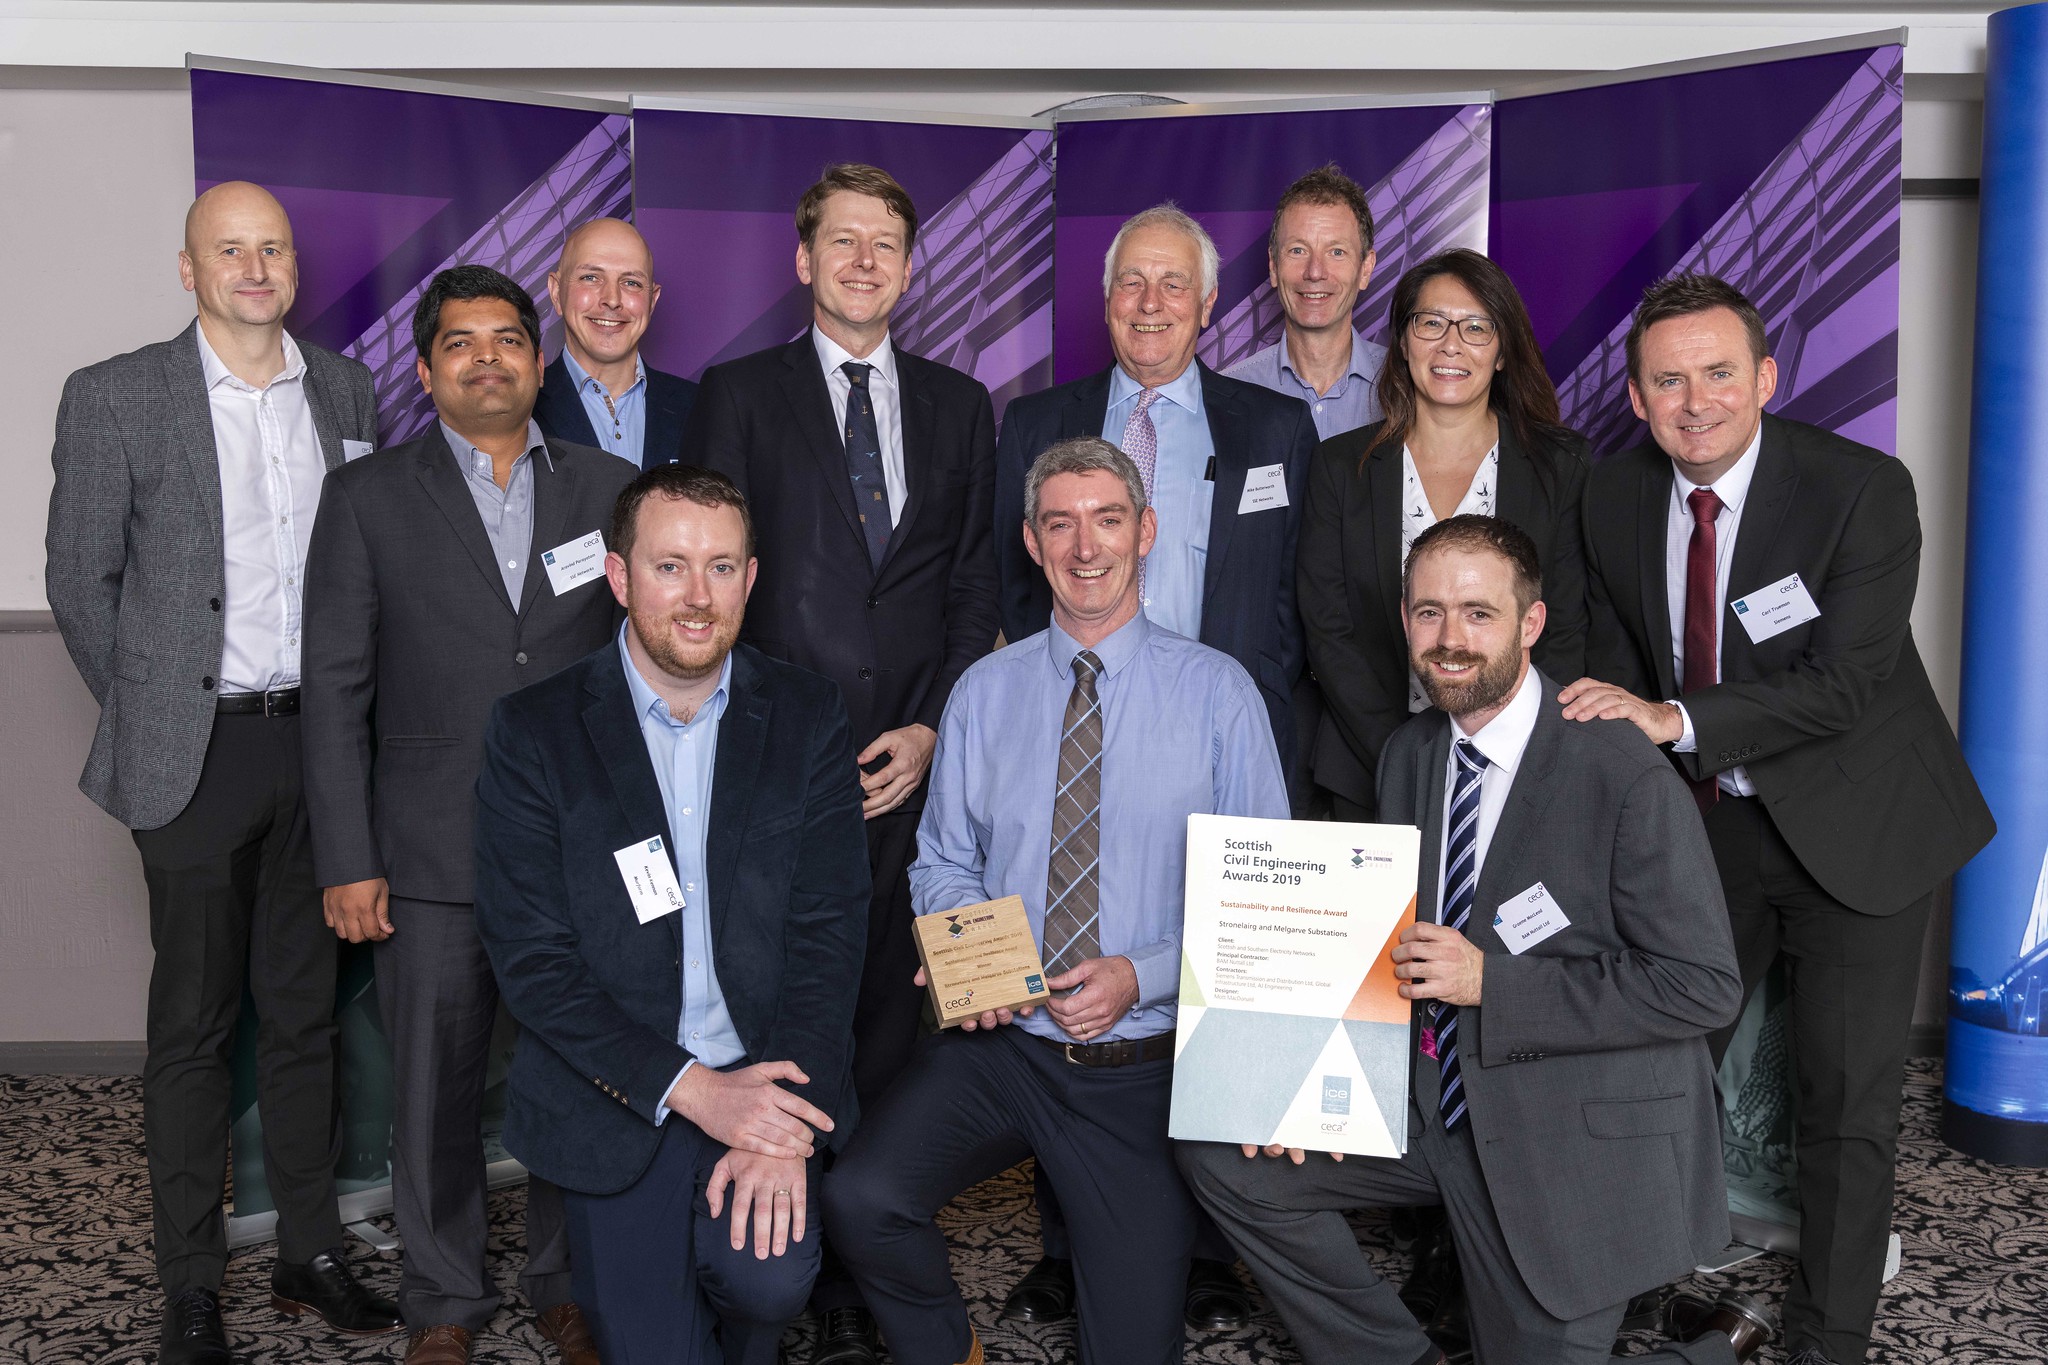 Scottish Civil Engineering Awards launched